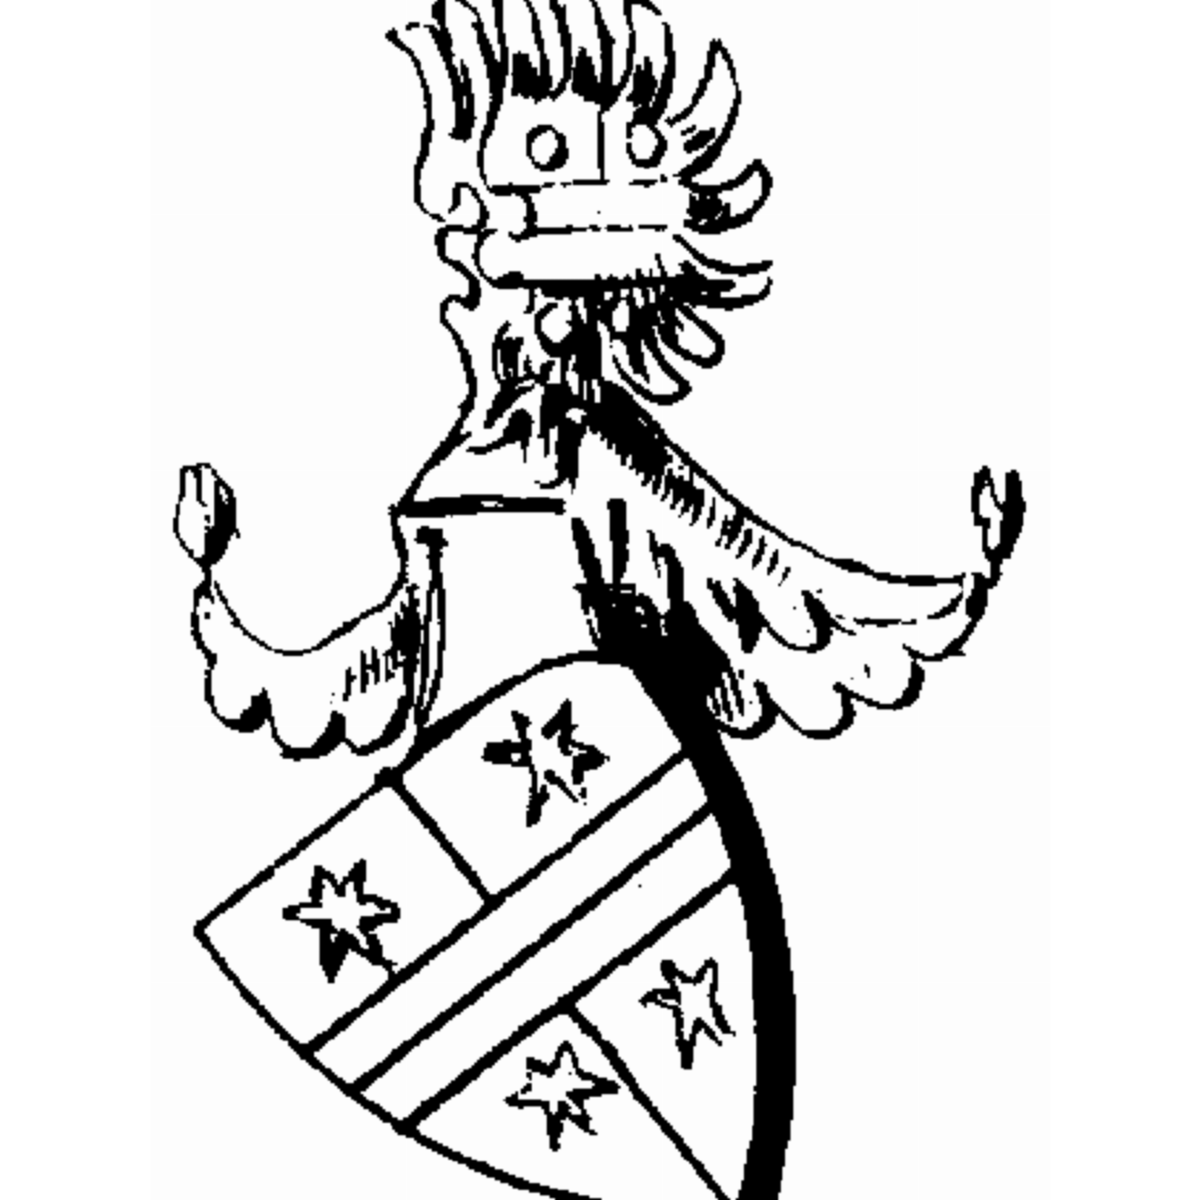 Wappen der Familie Eberlin